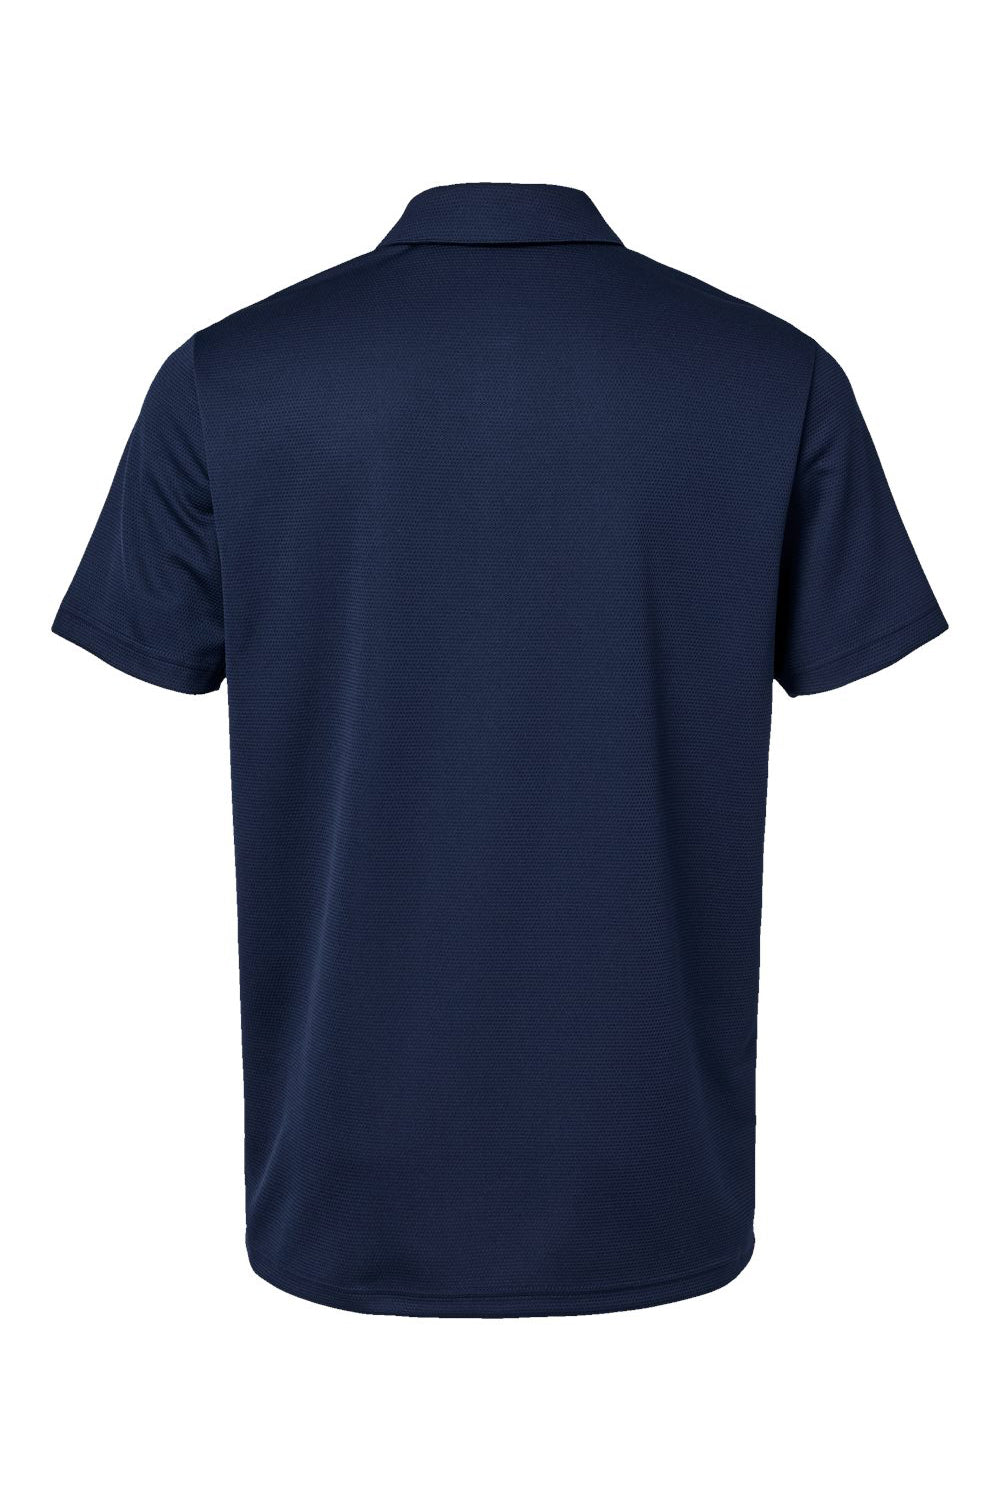 Adidas A580 Mens Micro Pique Short Sleeve Polo Shirt Collegiate Navy Blue Flat Back